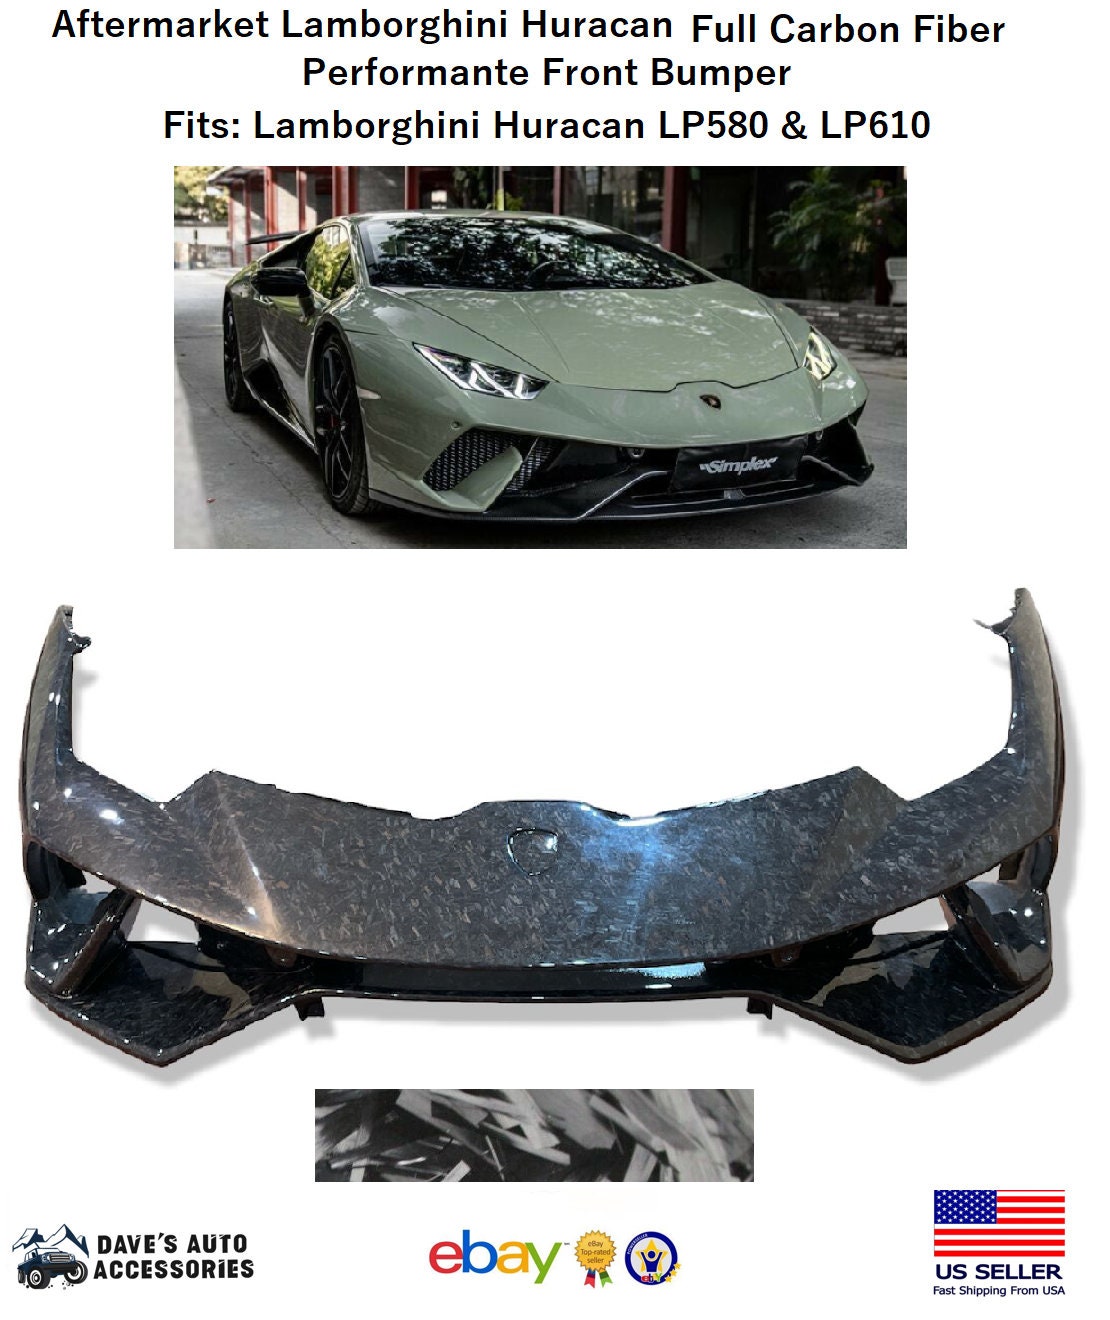 Forged Carbon Fiber Performante Front Bumper for Lamborghini - Etsy Ireland